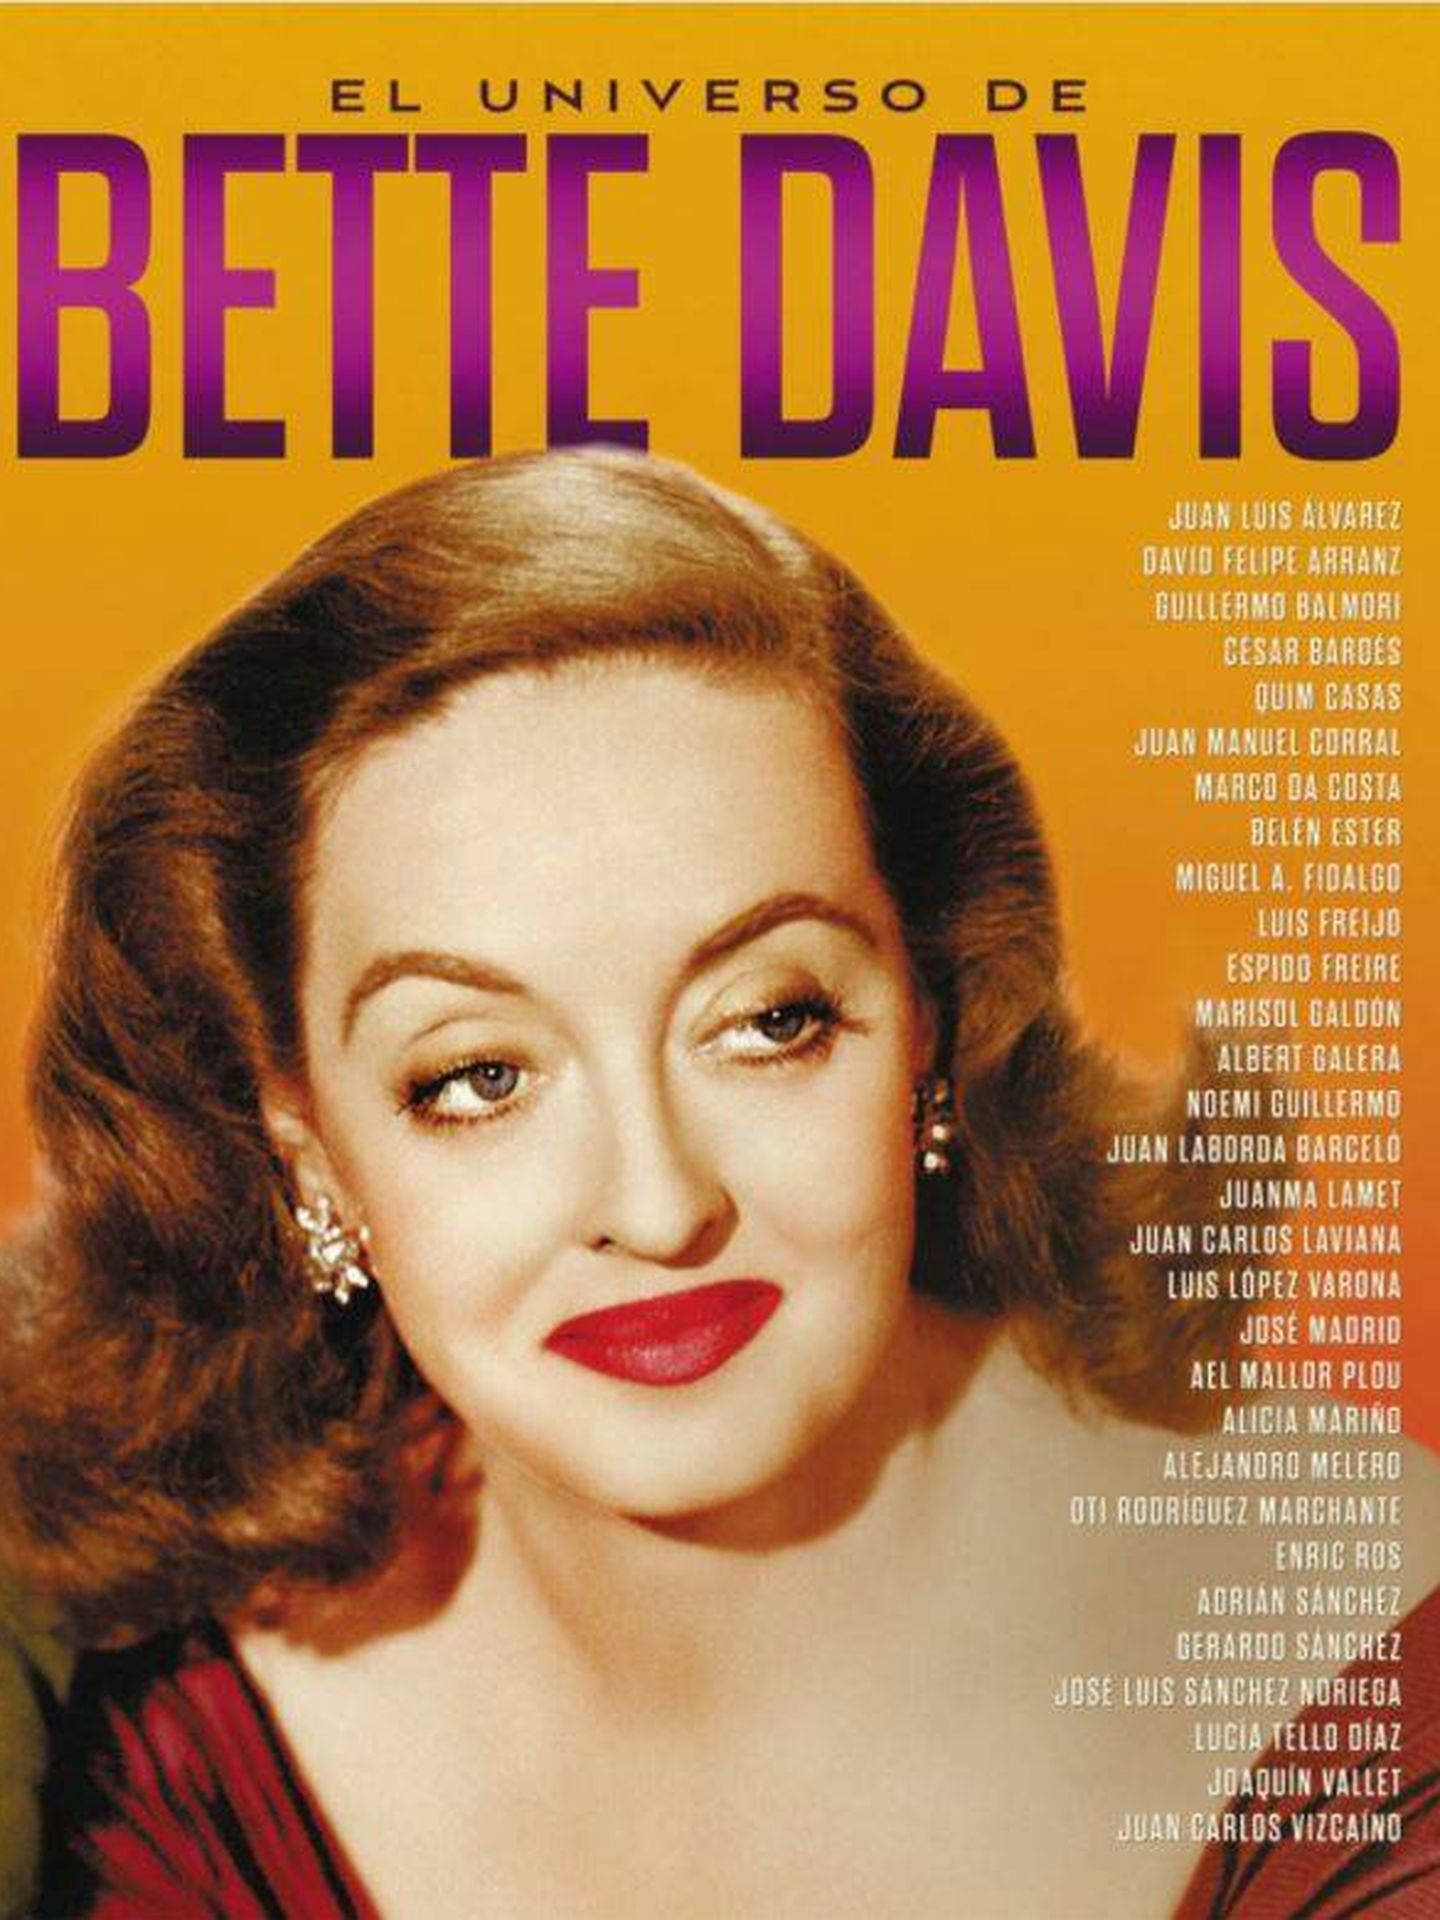 El universo de Bette Davis. (Ed. Notorious)